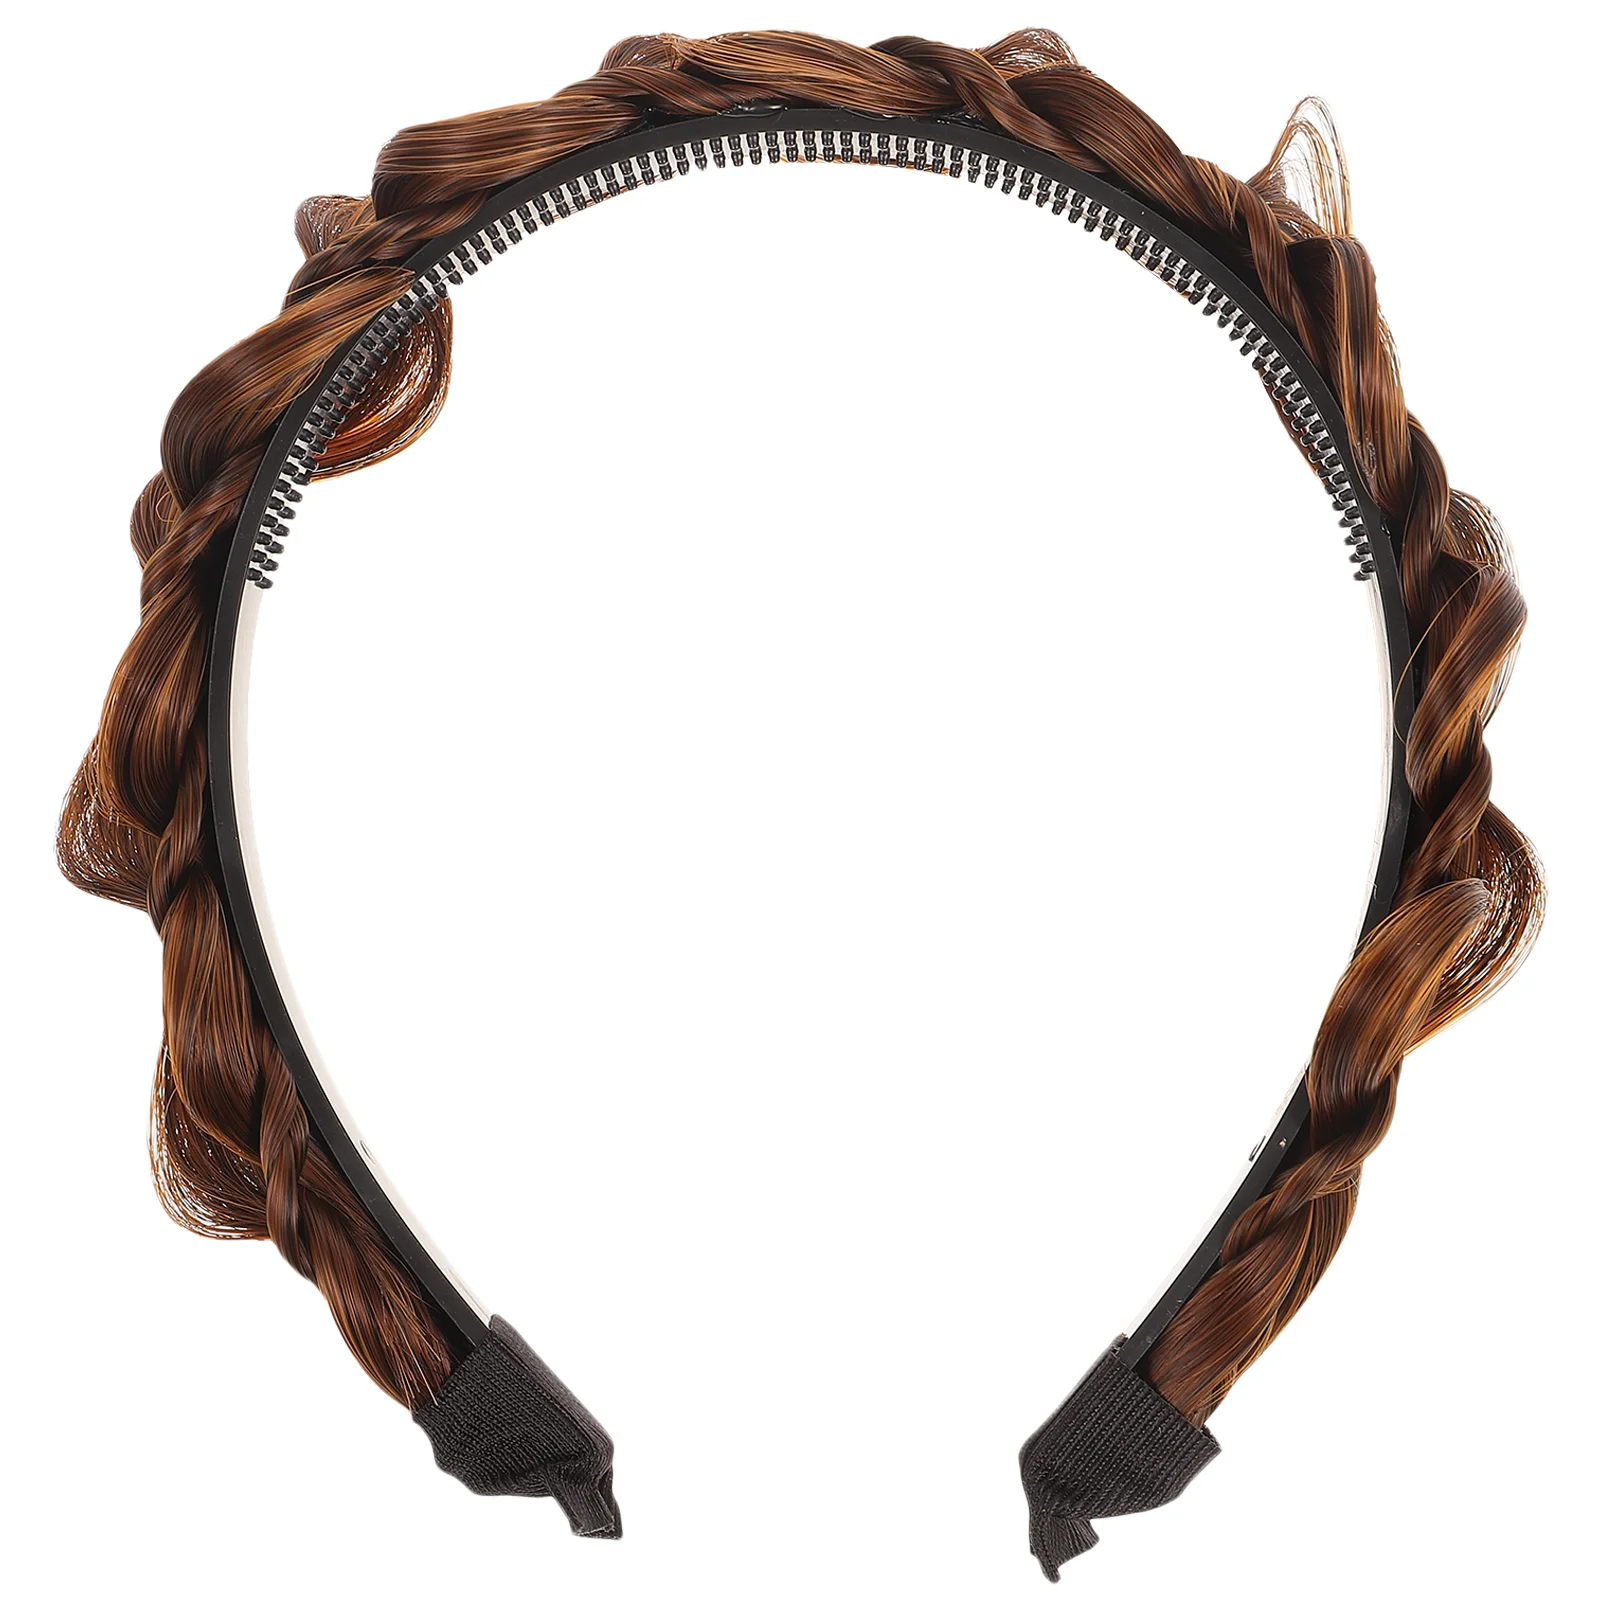 

Herringbone Headband Women Braid Teeth Braided Hair Accessory Nonslip Ties Accessories Hoops Headdress